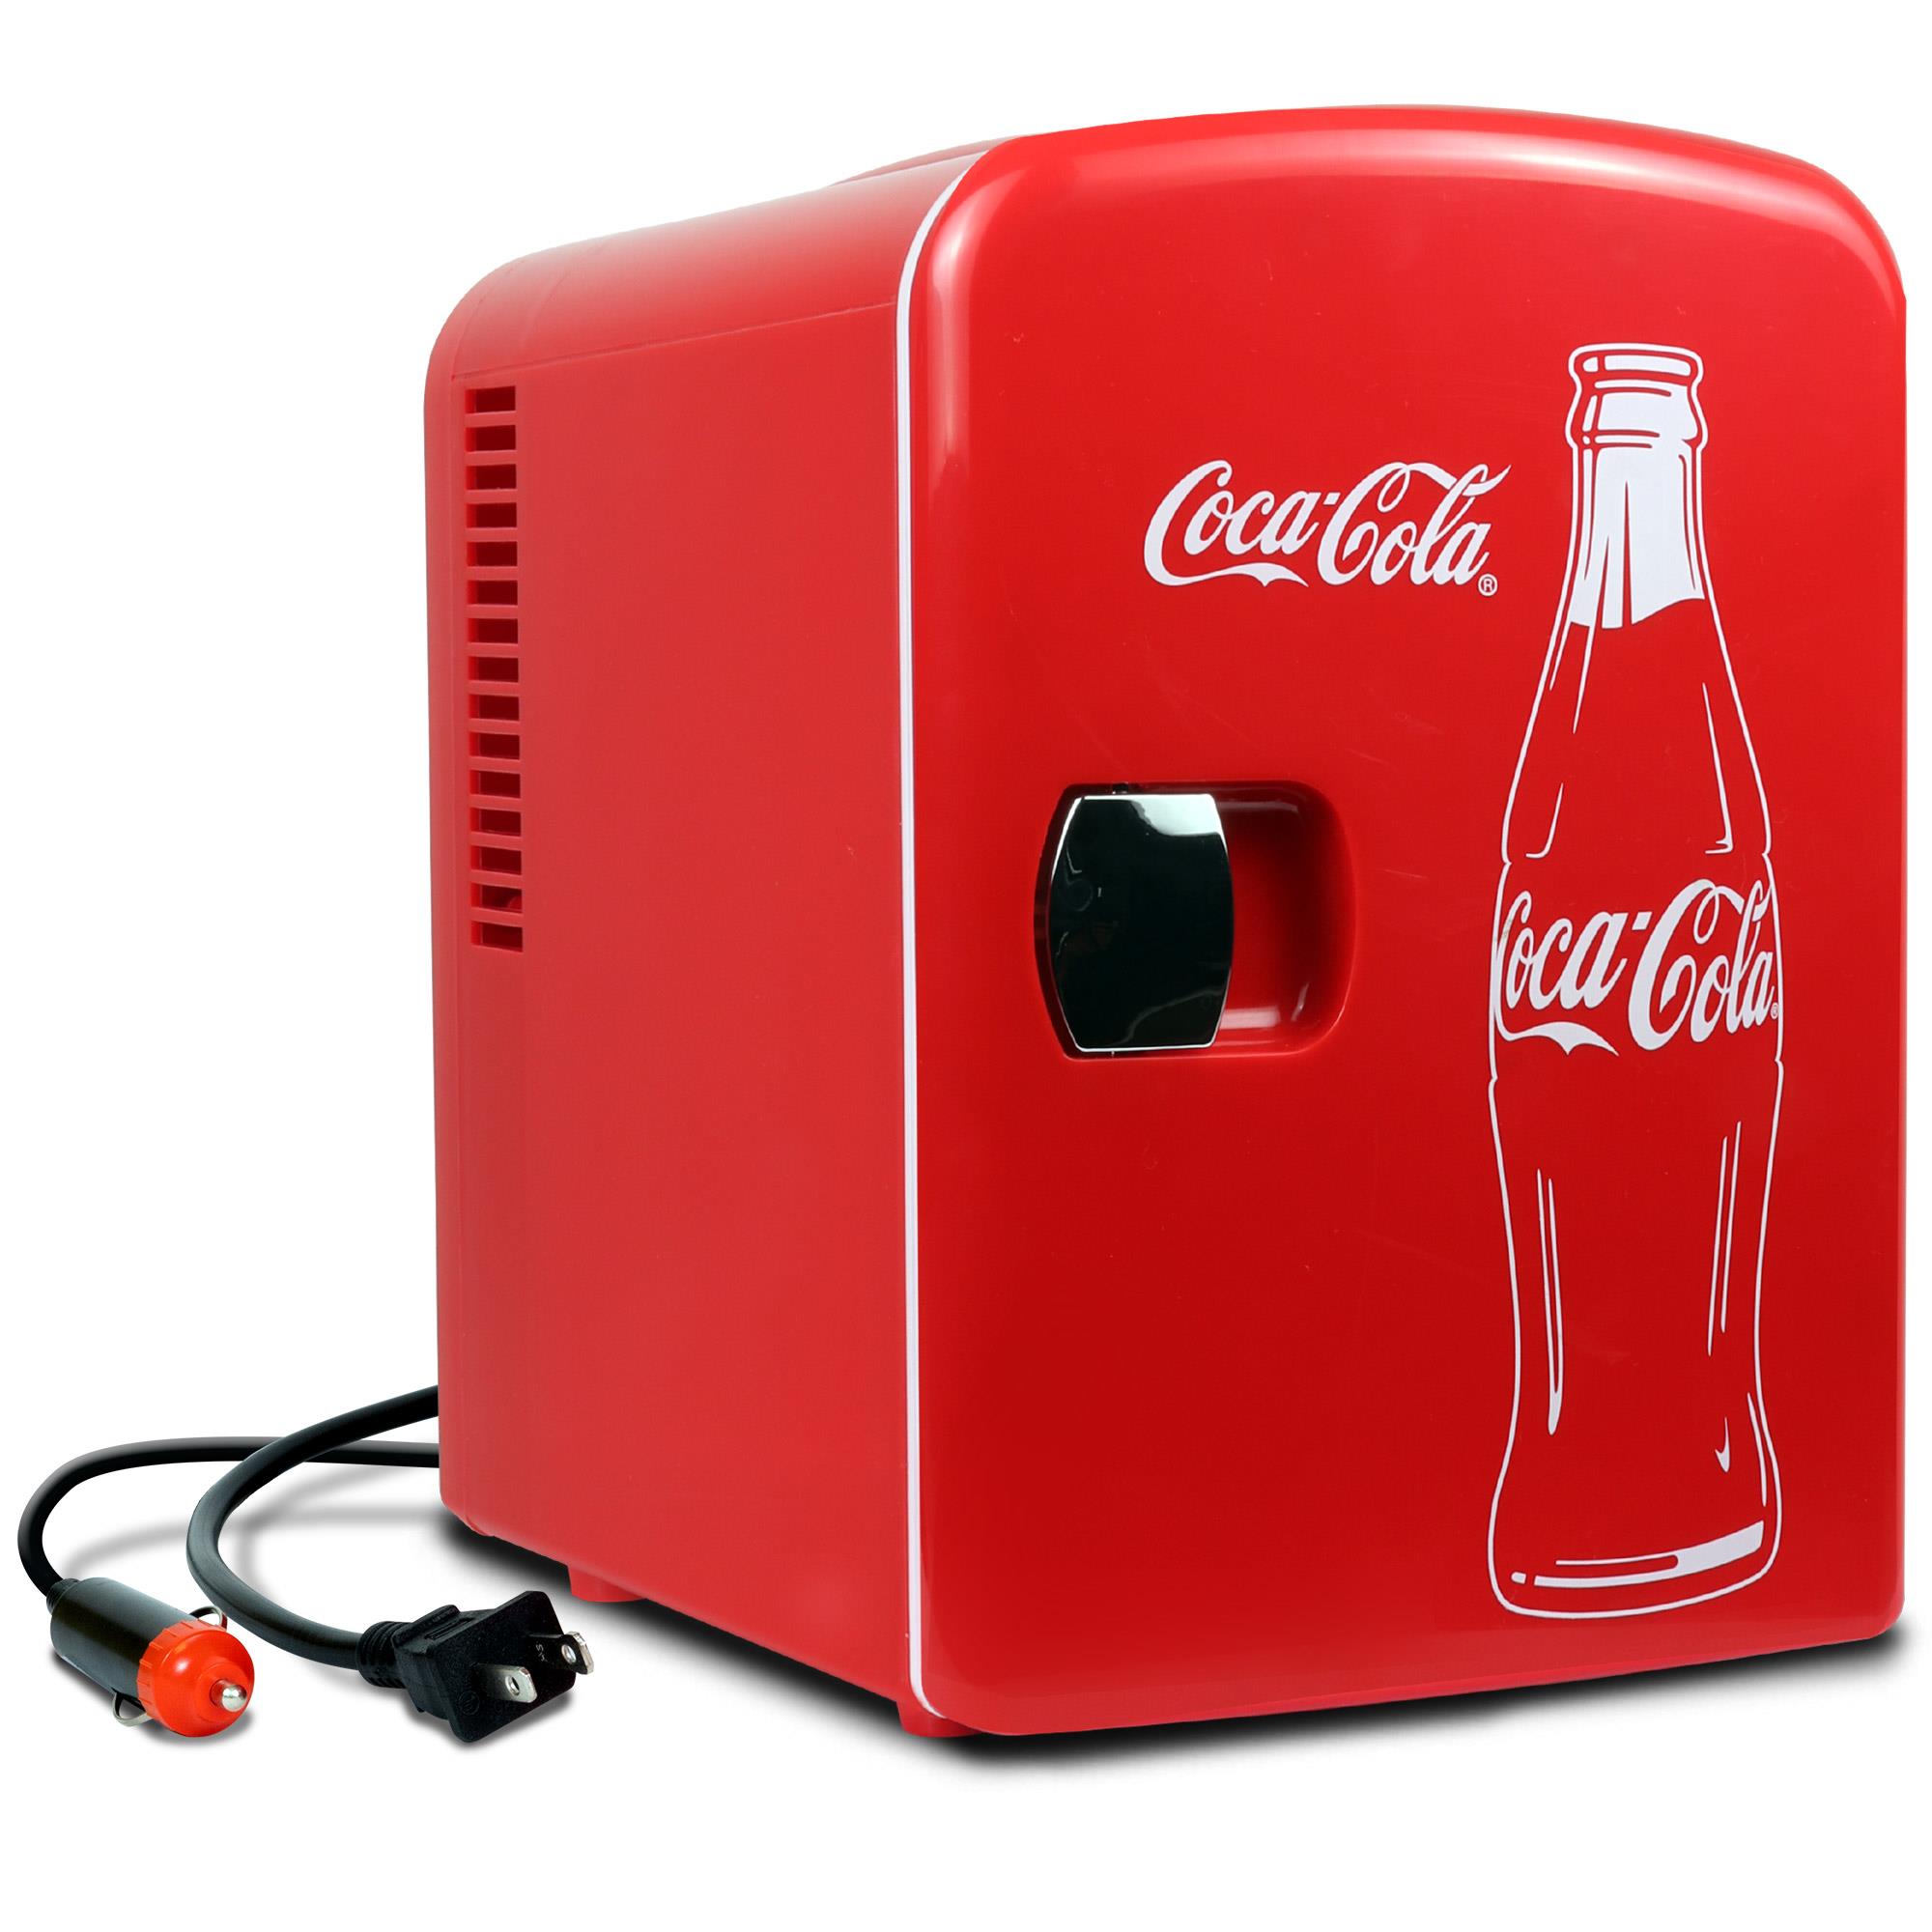 Coca-Cola Classic Coke Travel Cold Cup Gift Set